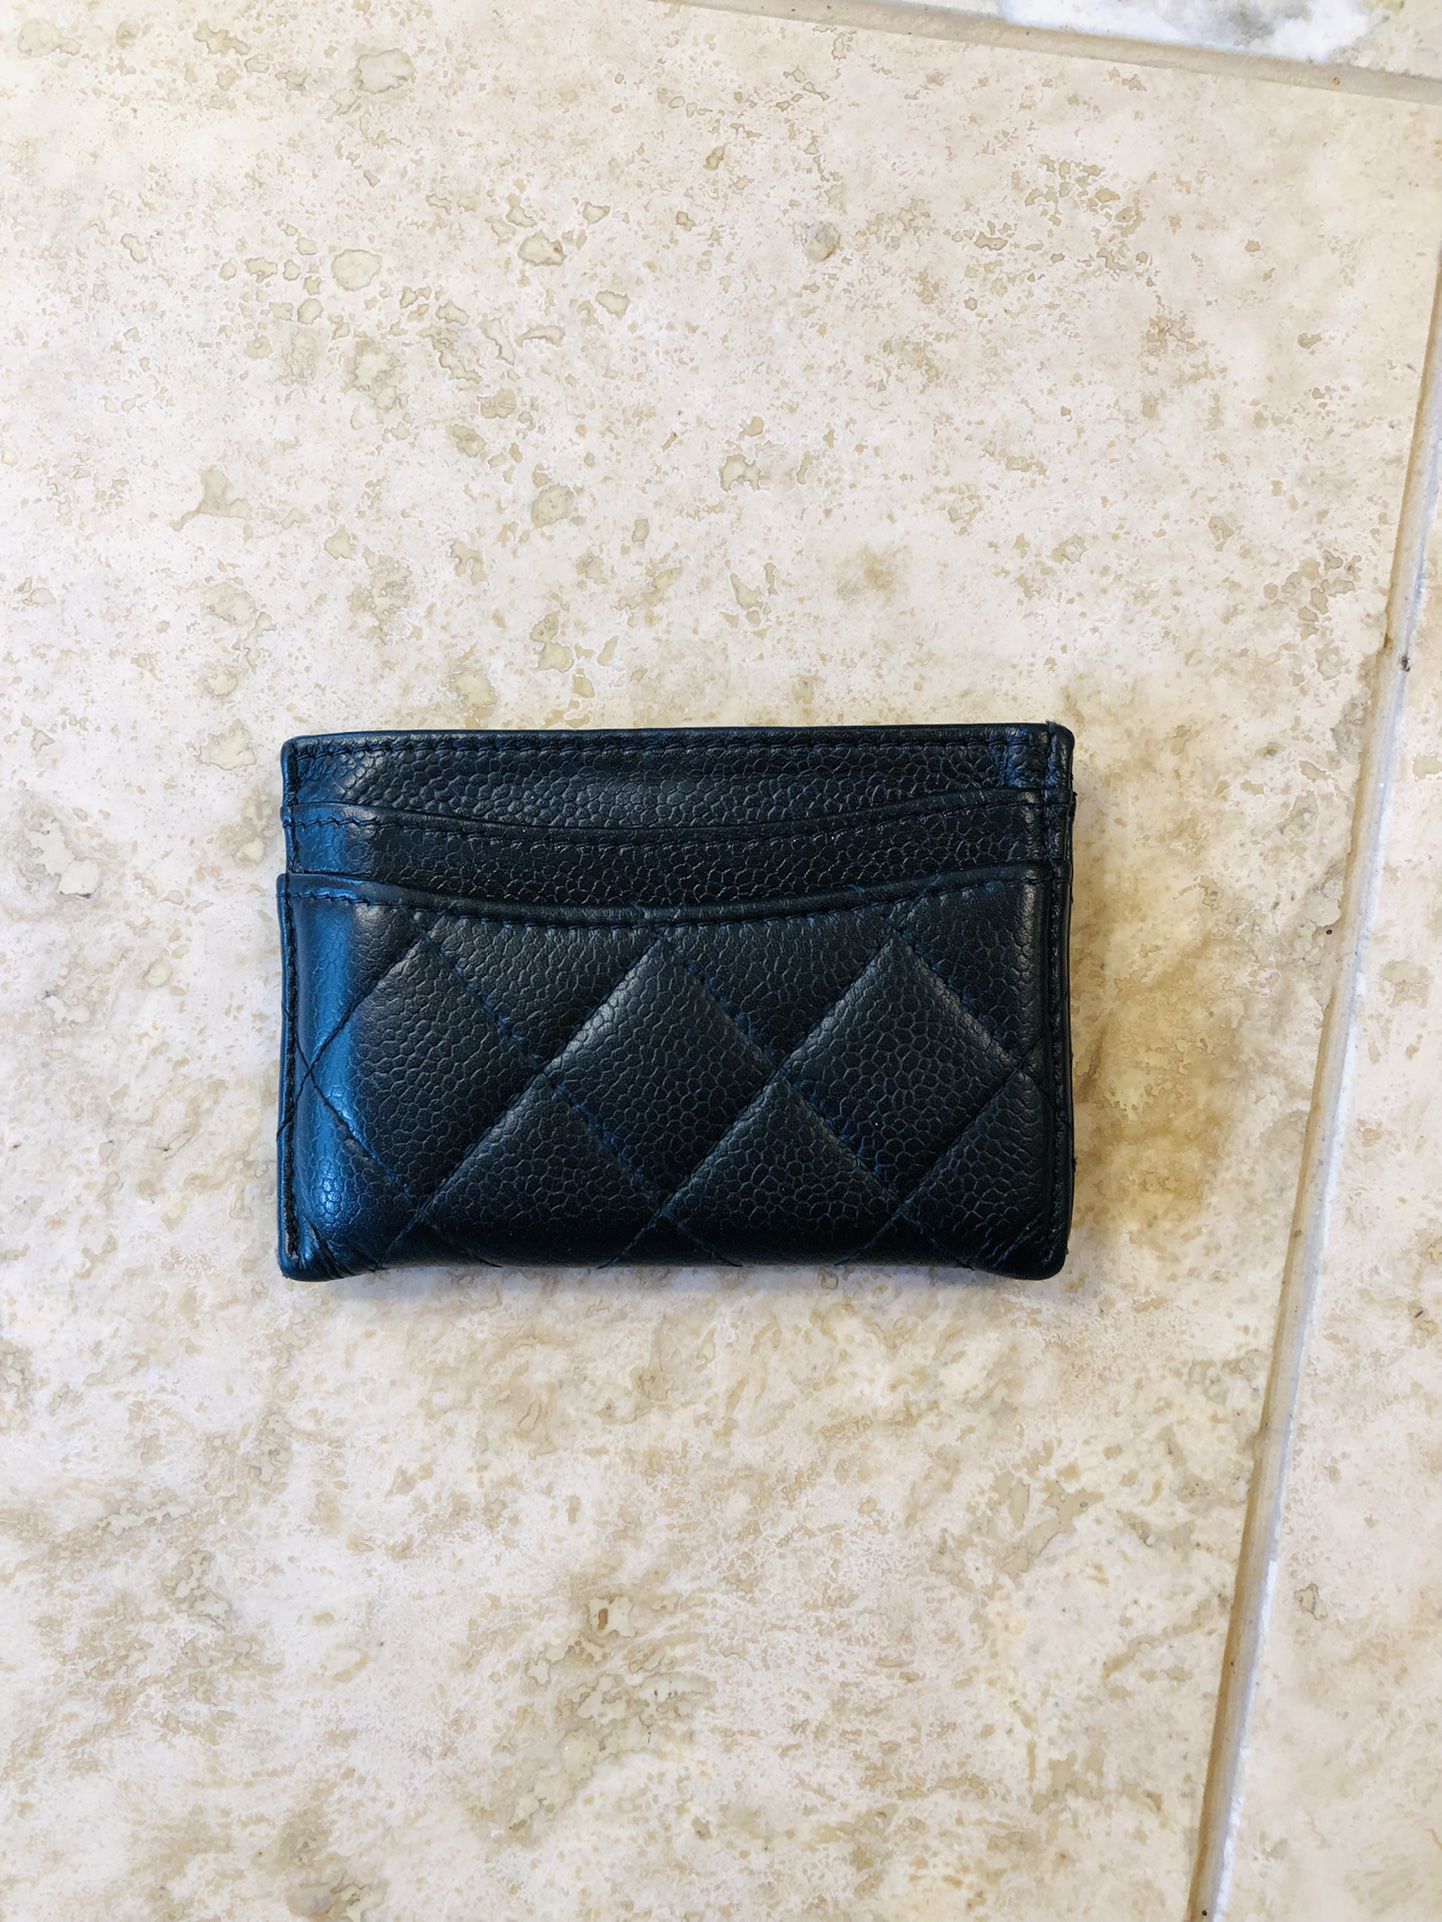 Chanel Card Holder Wallet for Sale in Bellevue, WA - OfferUp